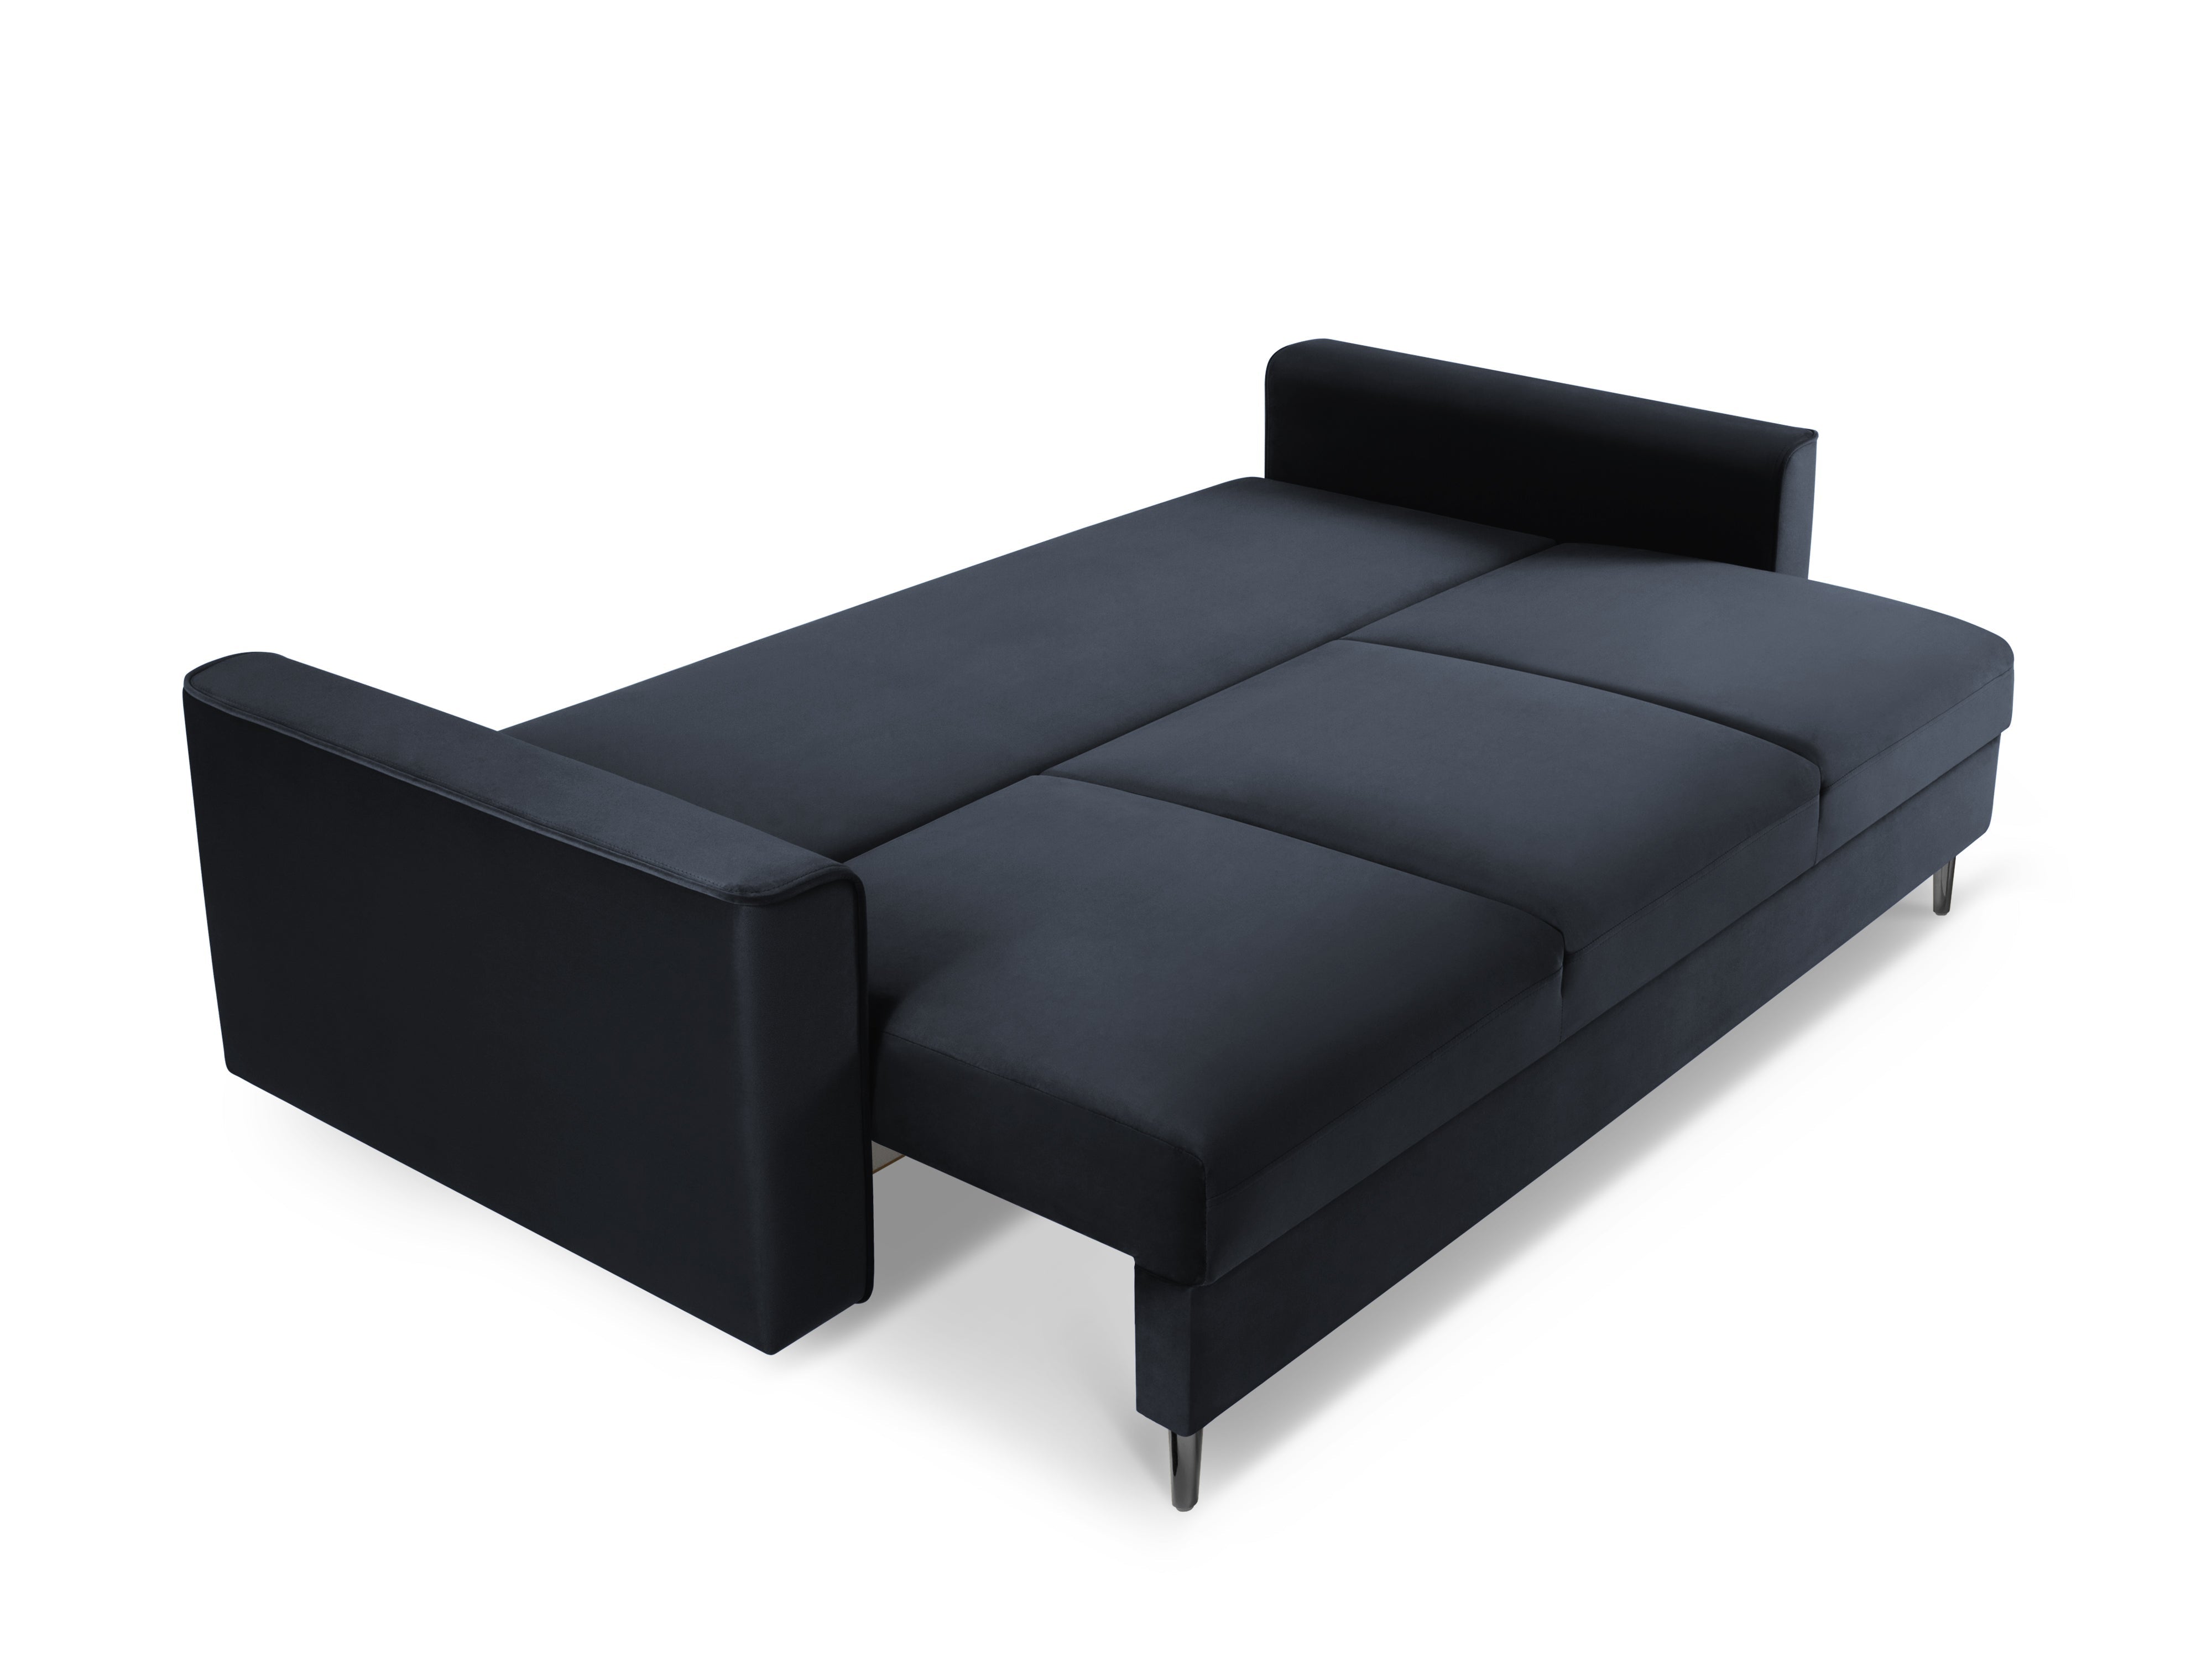 Sofa with a dark blue sleeping function